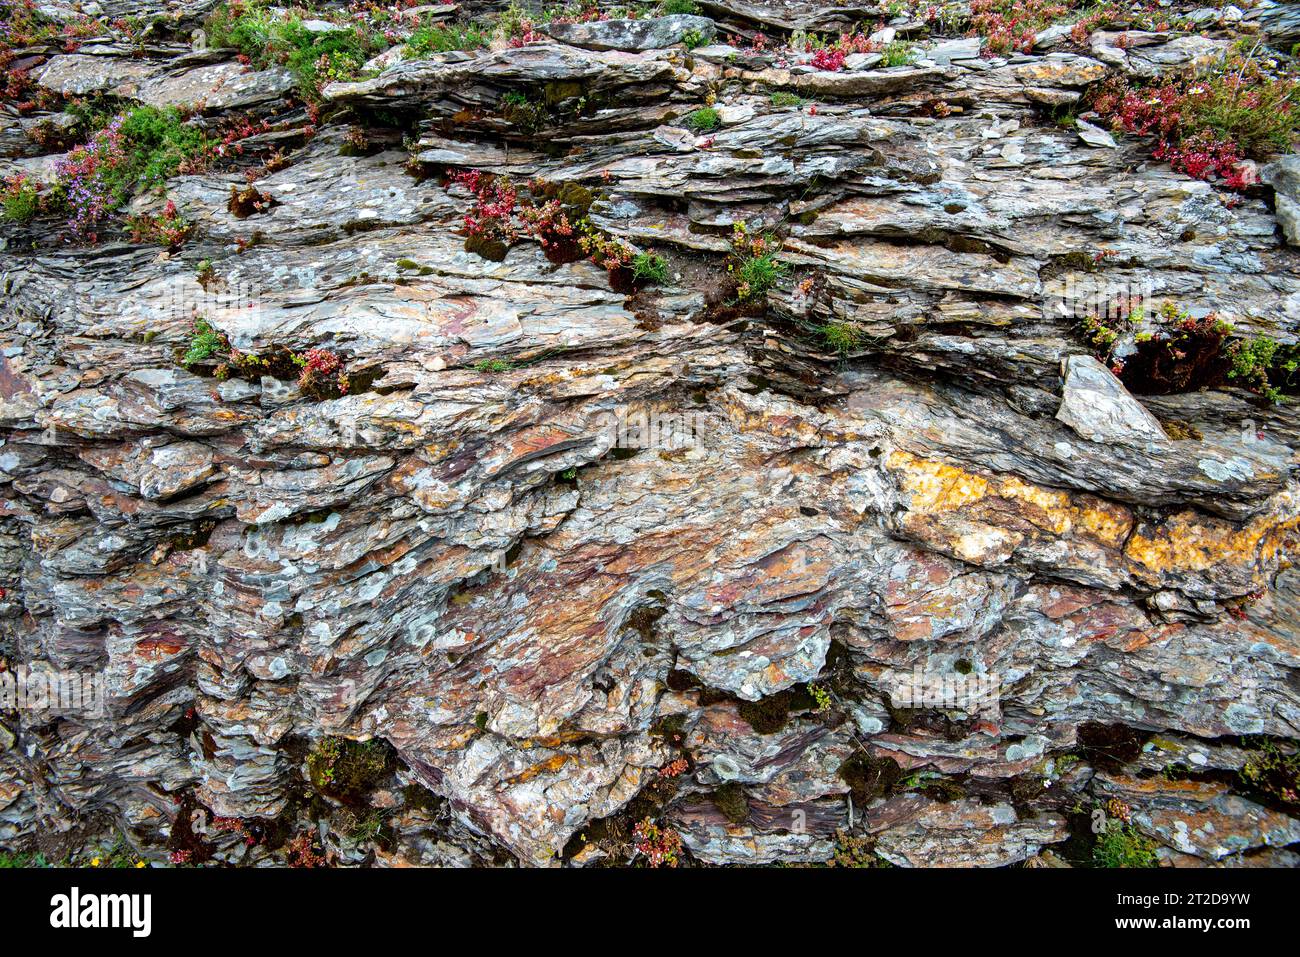 Polished Natural Metamorphic Rock Photo Slate 5x5in